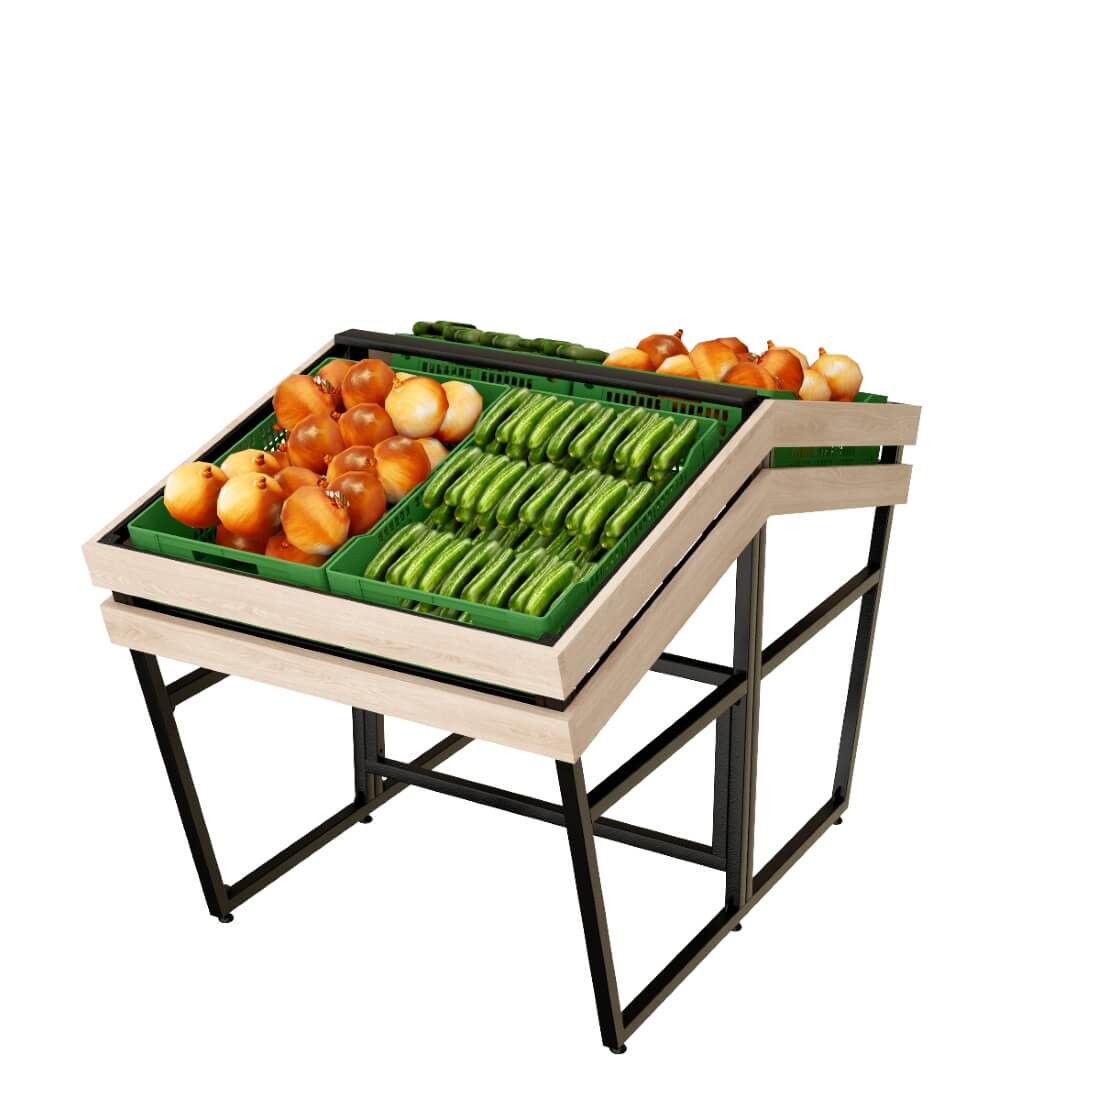 Warenpräsentation. Gemüseregal X-Cameleon MiniTwo. Eine Doppelsektion mit 4 Kisten befüllt